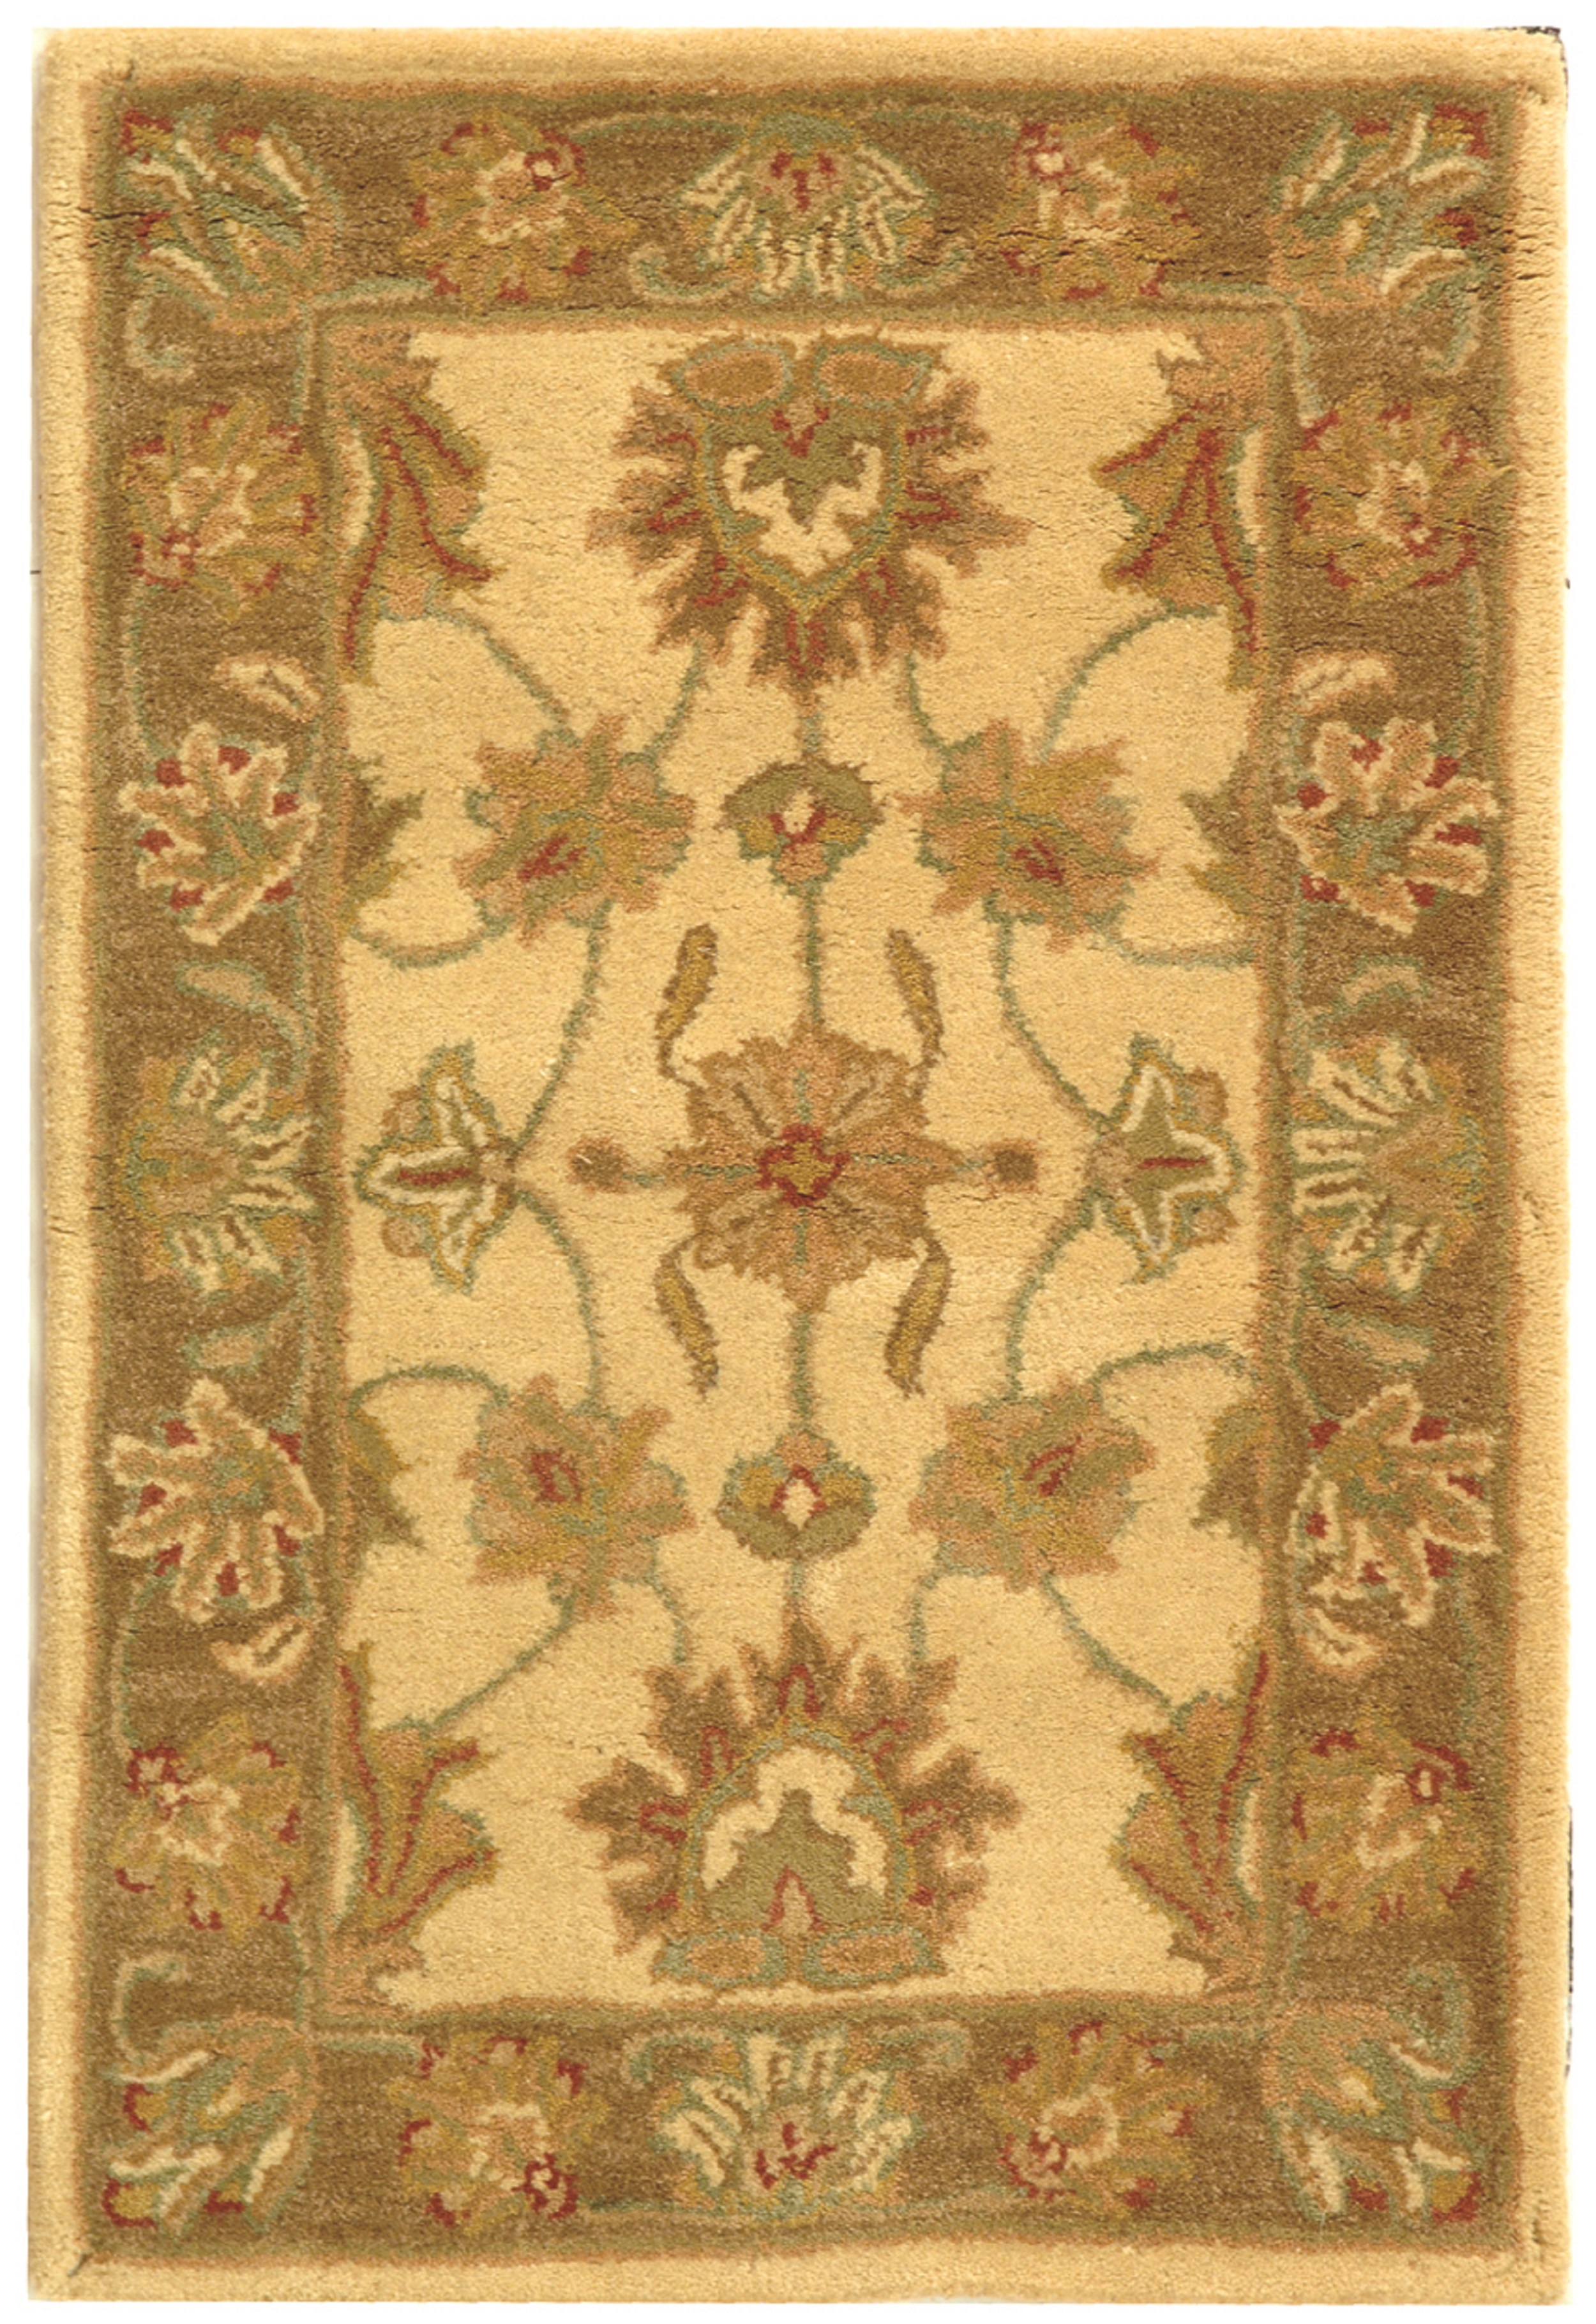 SAFAVIEH Heritage Regis Traditional Wool Area Rug, Ivory/Brown, 2' x 3' - image 1 of 4